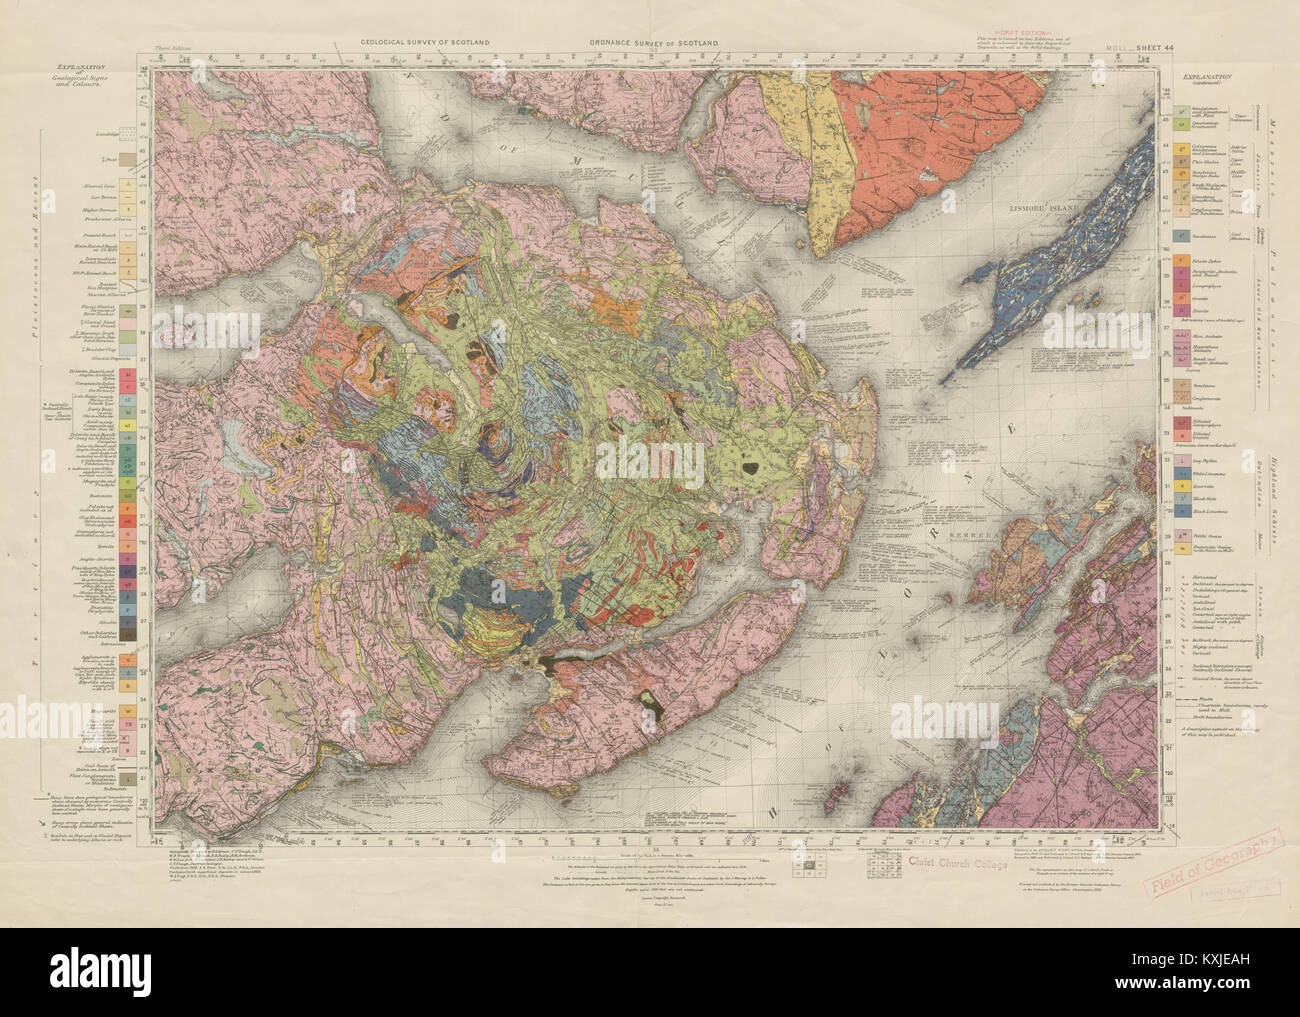 Mull. Mapa geológico. Hoja 44. Escocia Oban Lismore Kerrara 1953 Foto de stock